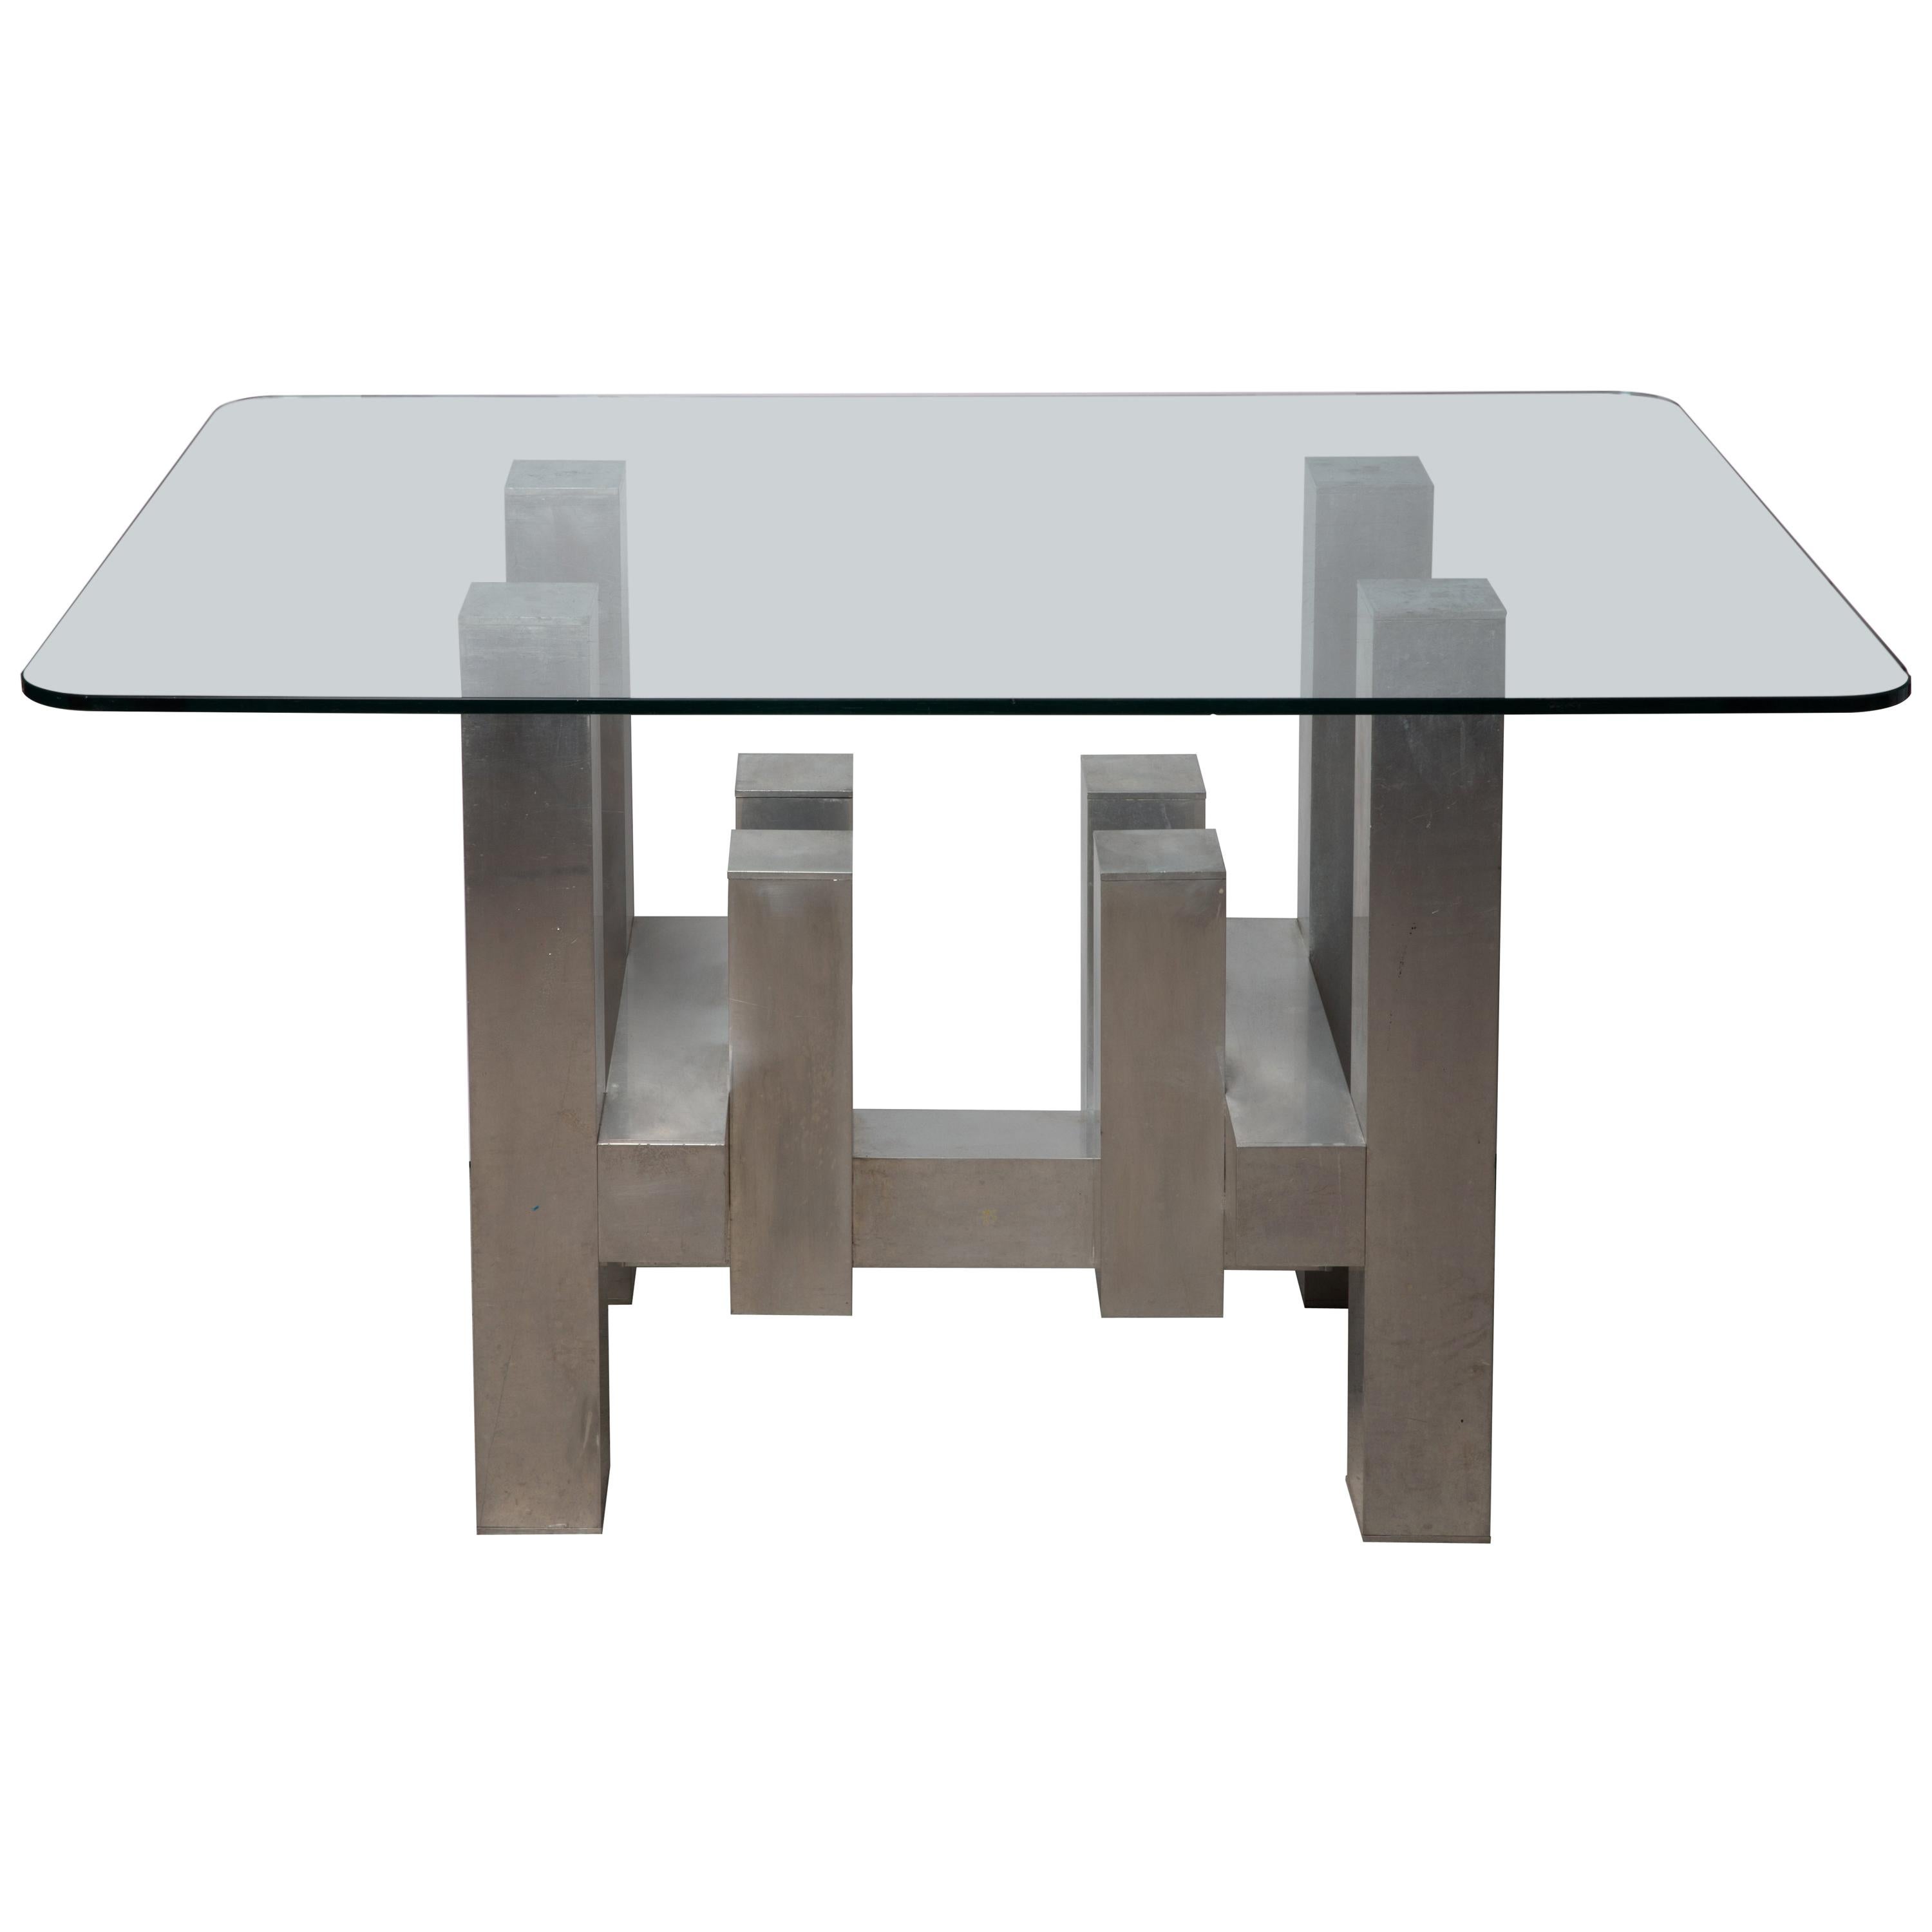 Paul Mayen Cityscape for Habitat Aluminum Geometric Based Dining Table